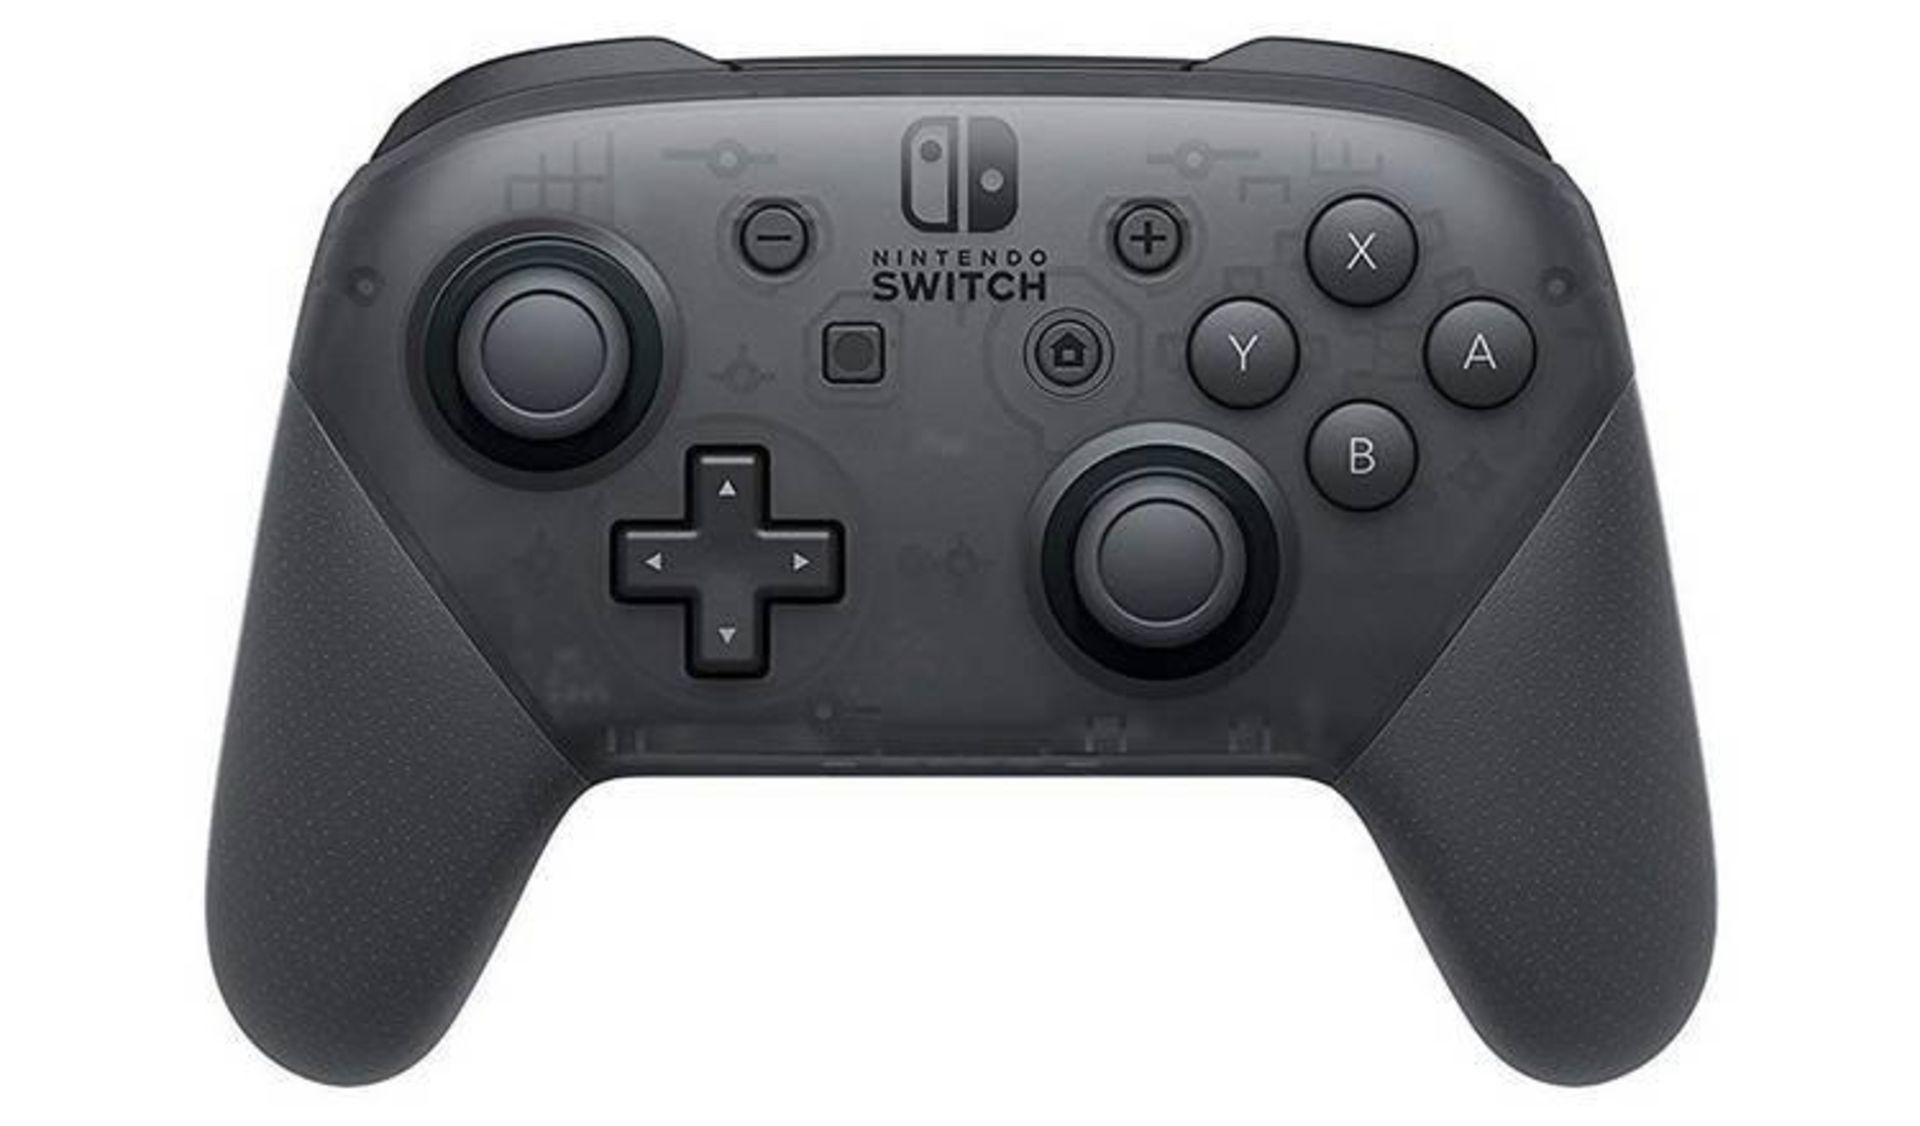 Nintendo Switch Pro Wireless Controller - Black 685/1387 £59.99 RRP